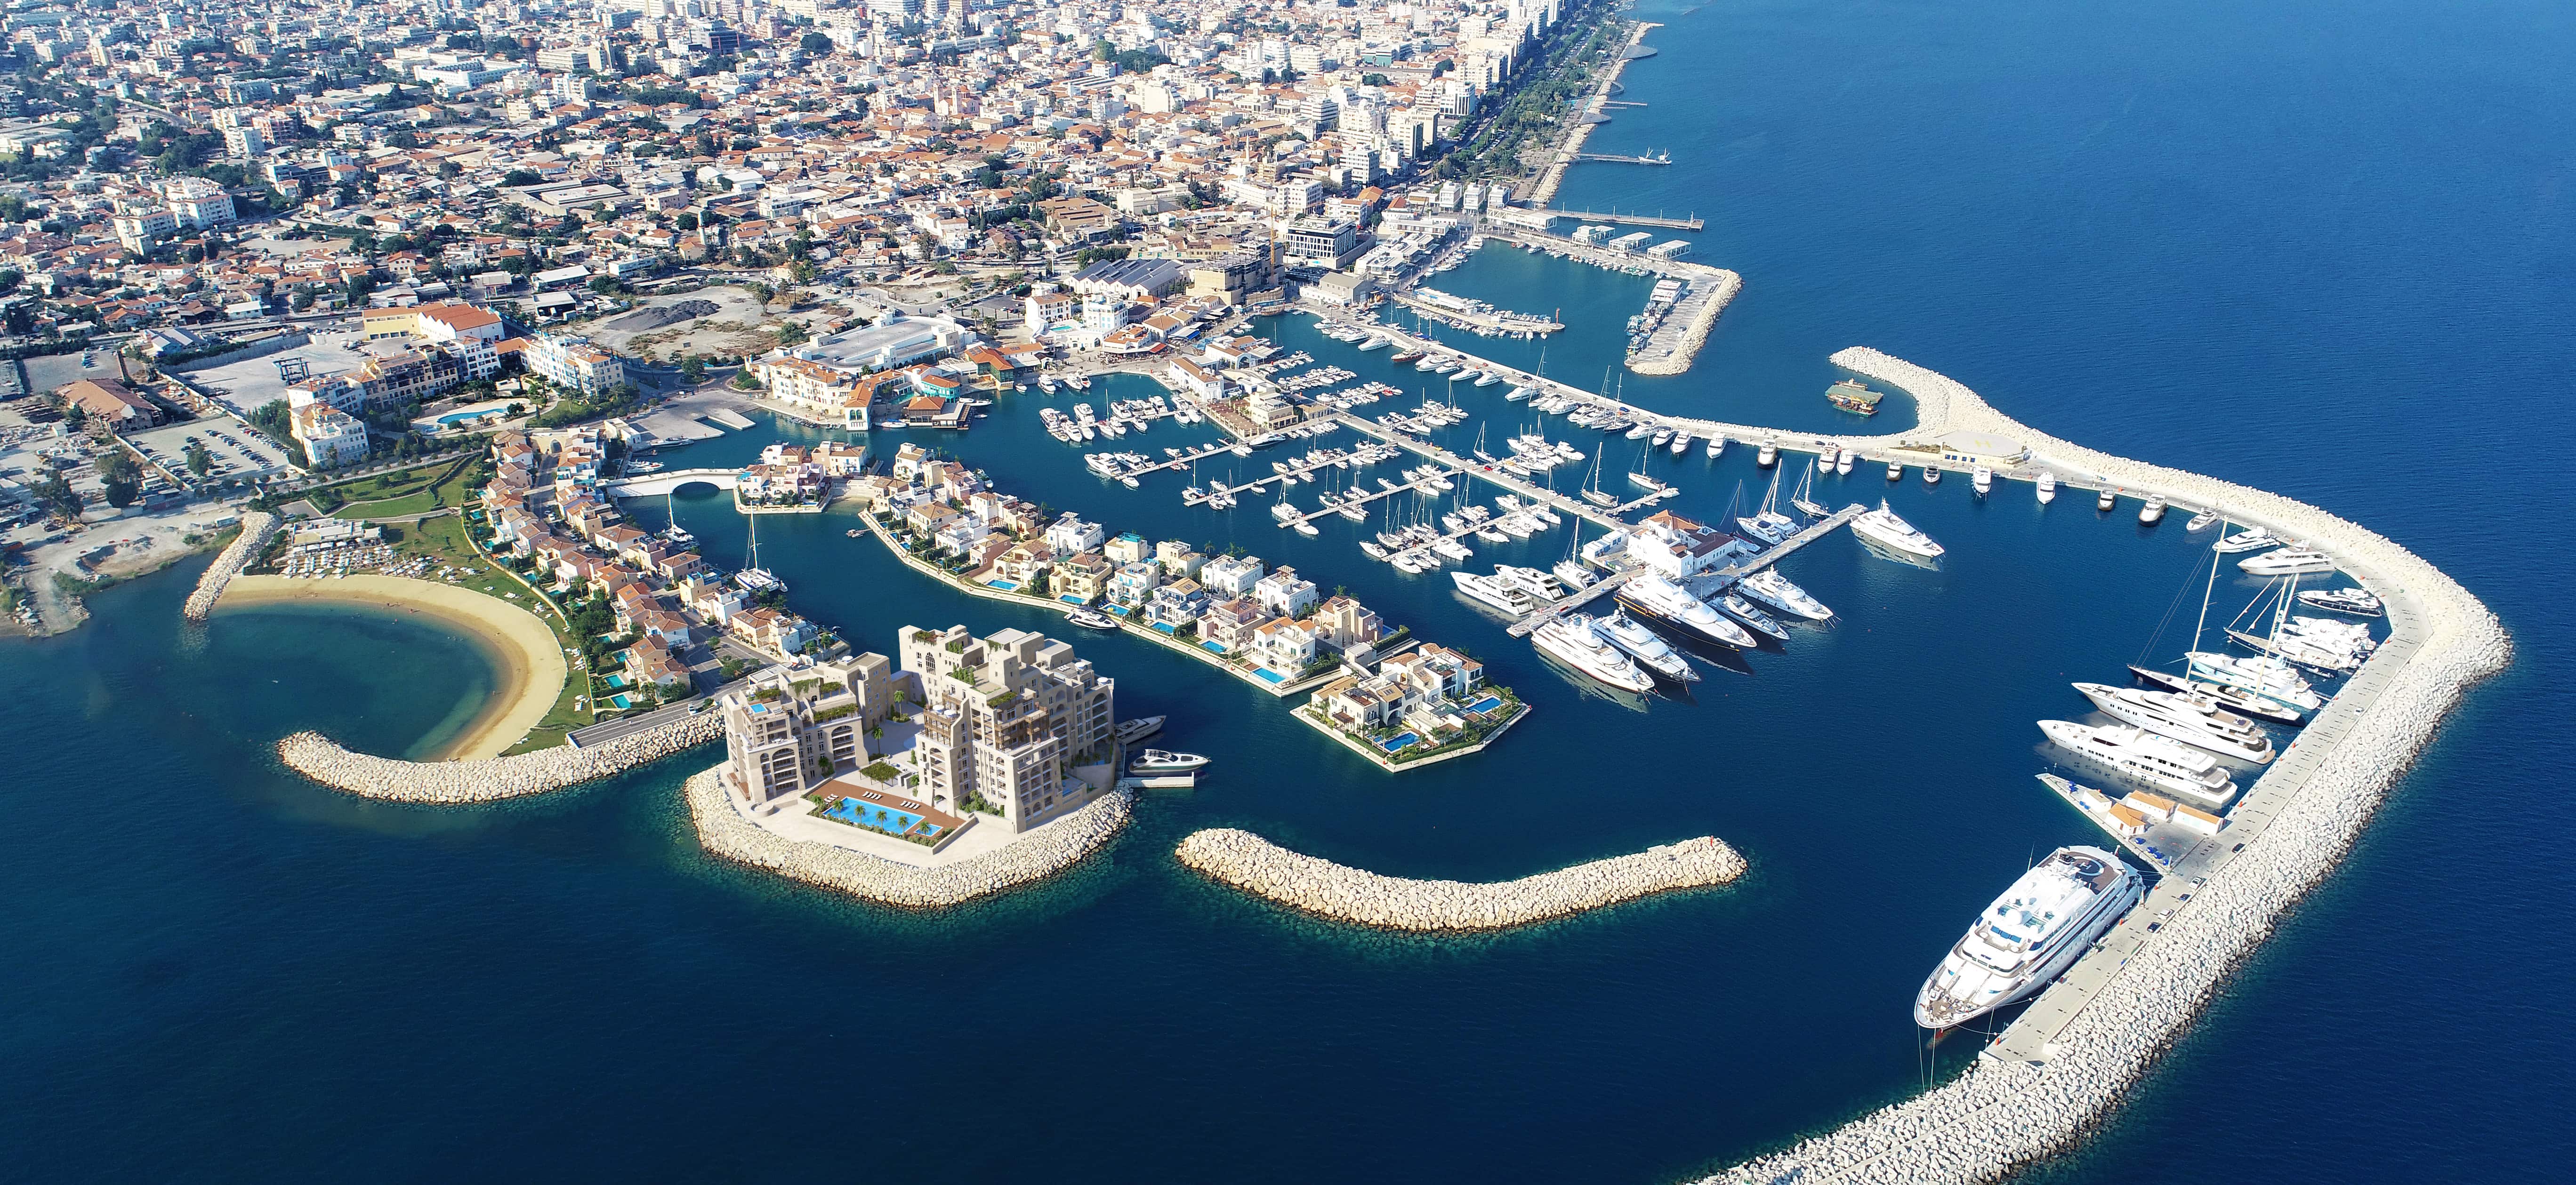 Marina surrounded by blue sea